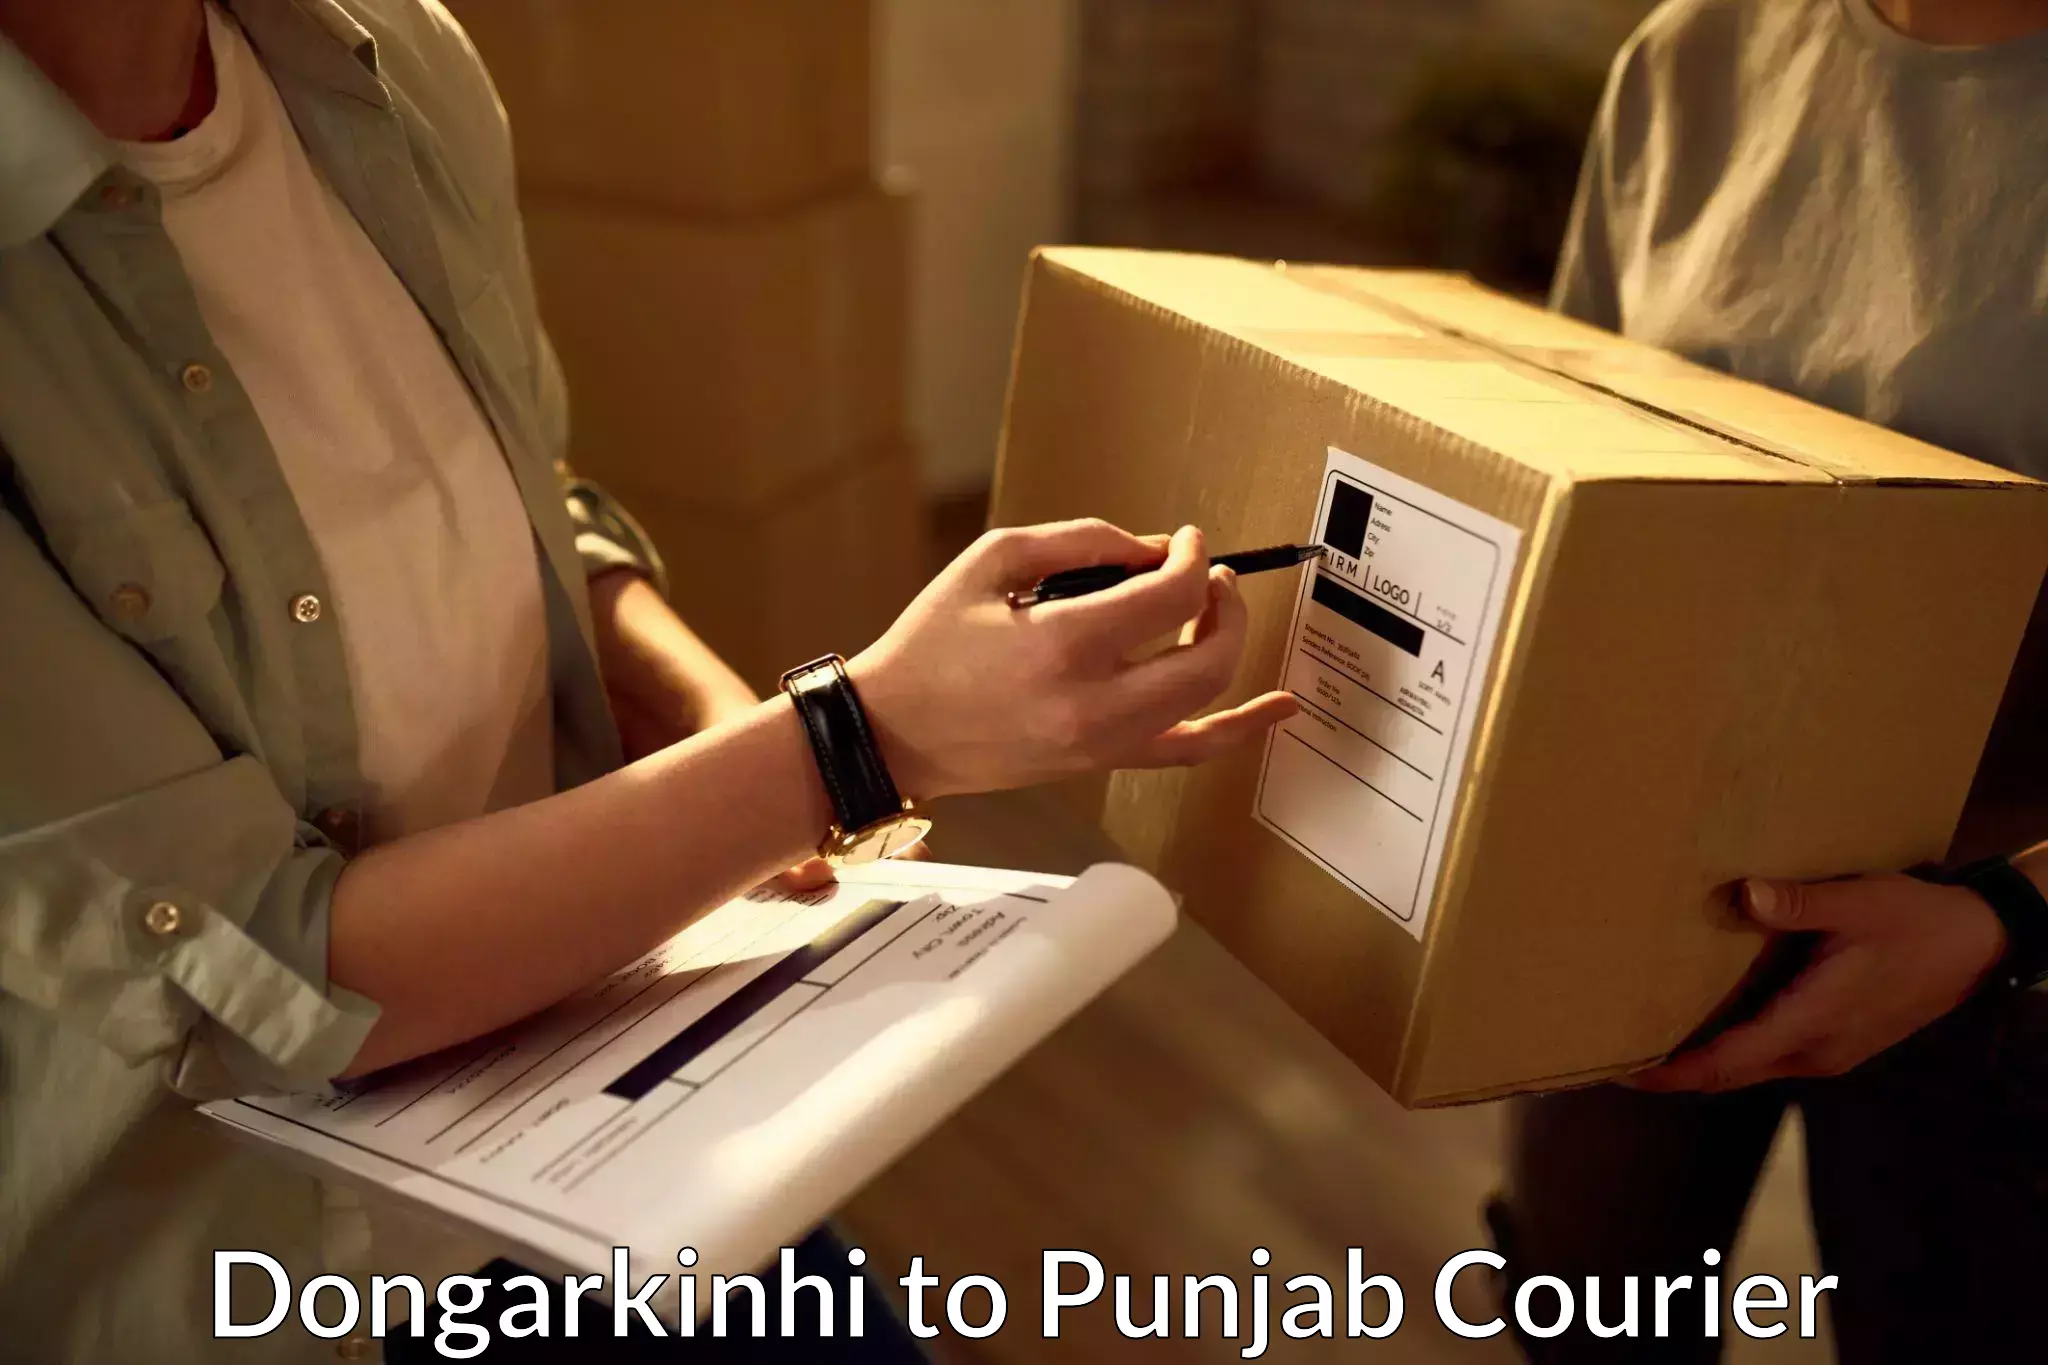 Global logistics network Dongarkinhi to Punjab